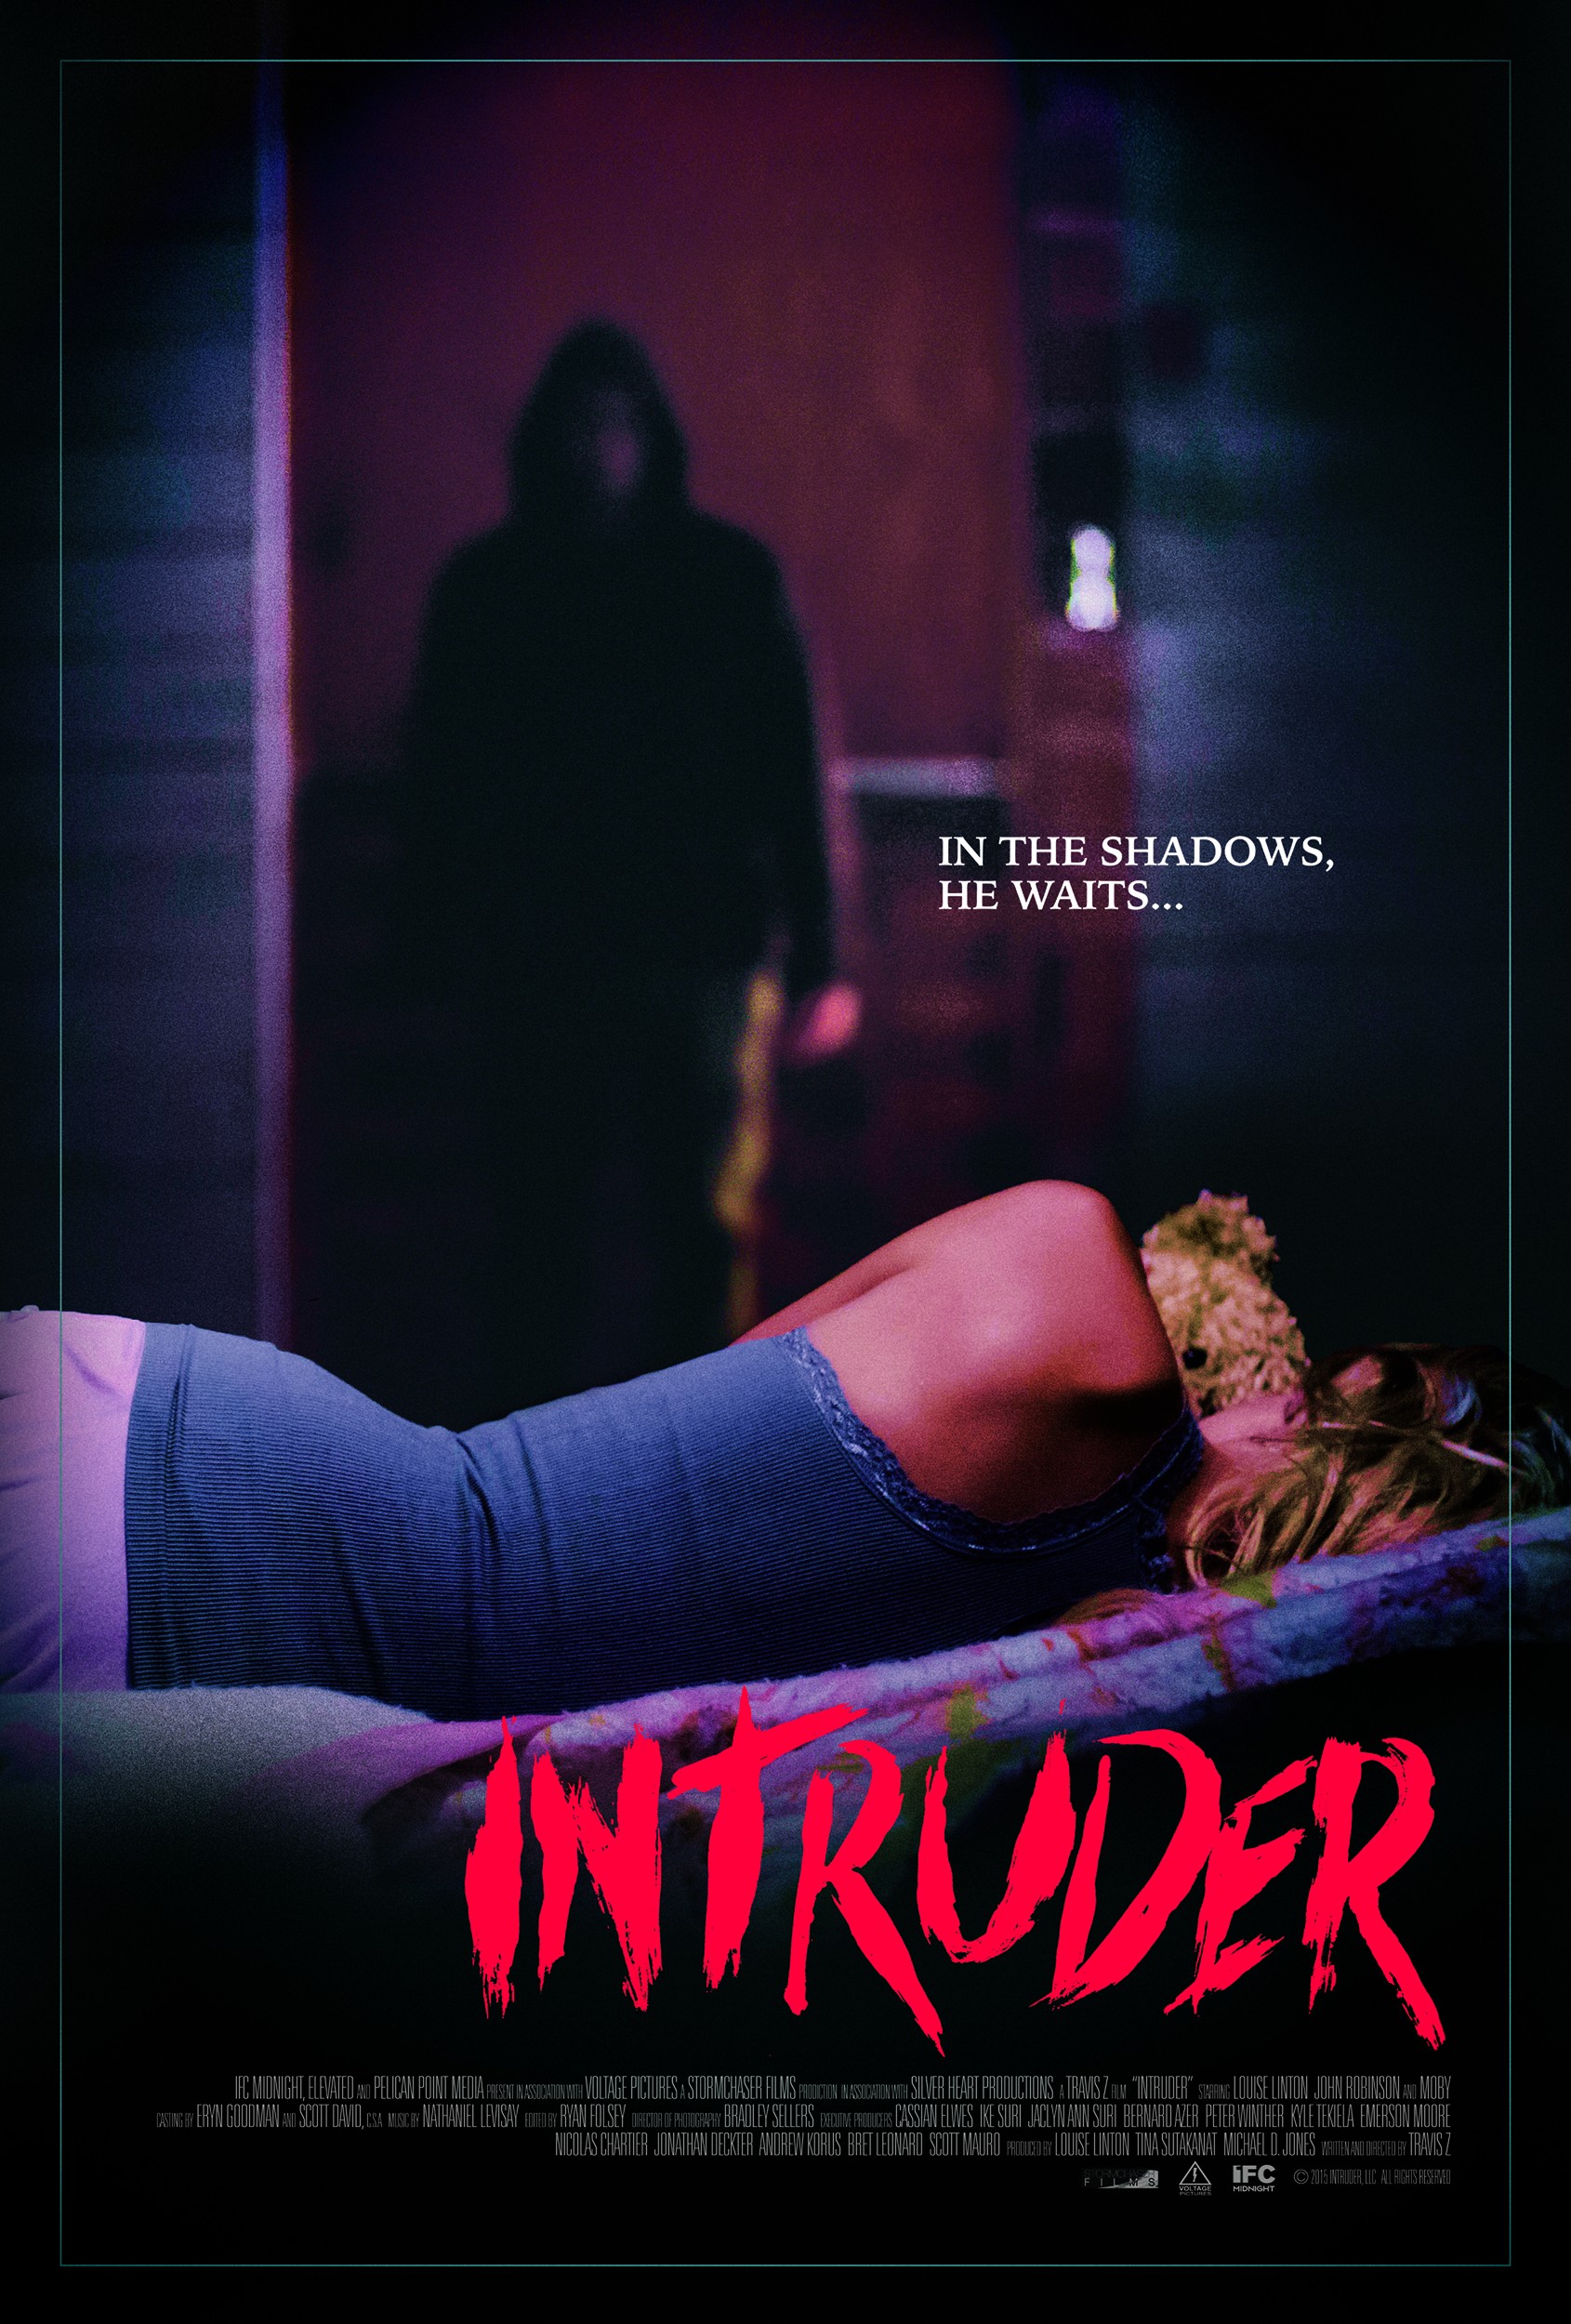 Intruder (2016) (Movie Review)